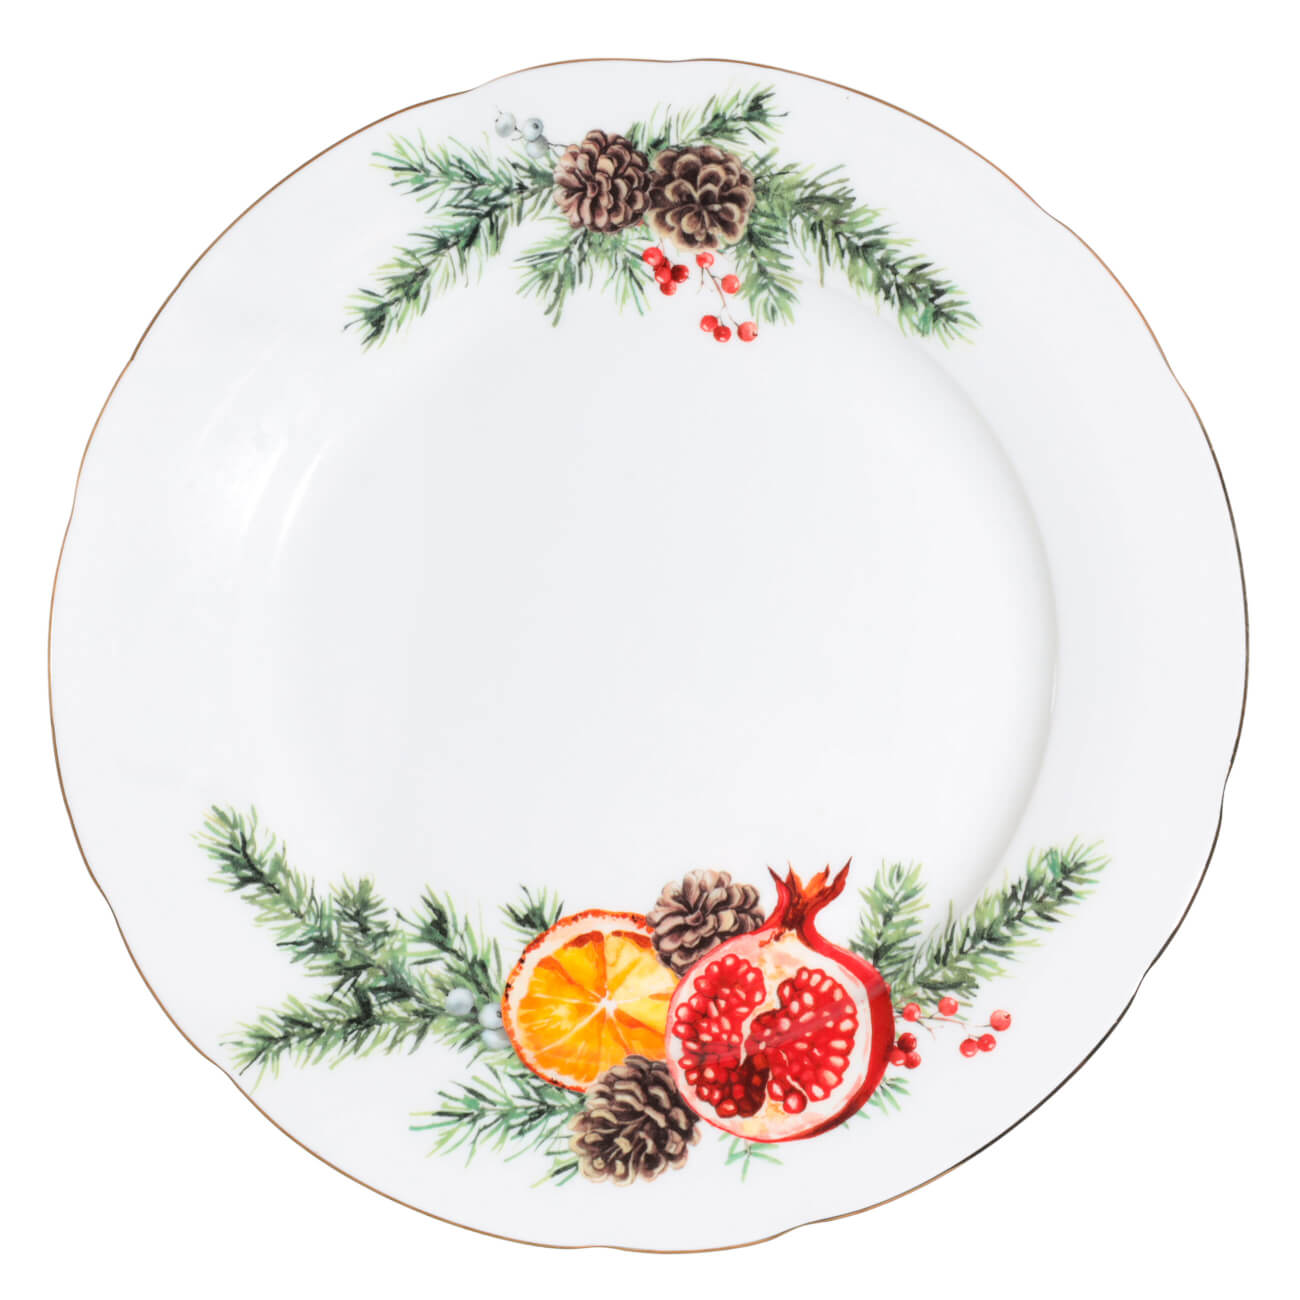 Тарелка обеденная, 27 см, фарфор F, Апельсин и гранат, Christmas miracle тарелка обеденная 27 см фарфор f снегирь и шишки christmas miracle